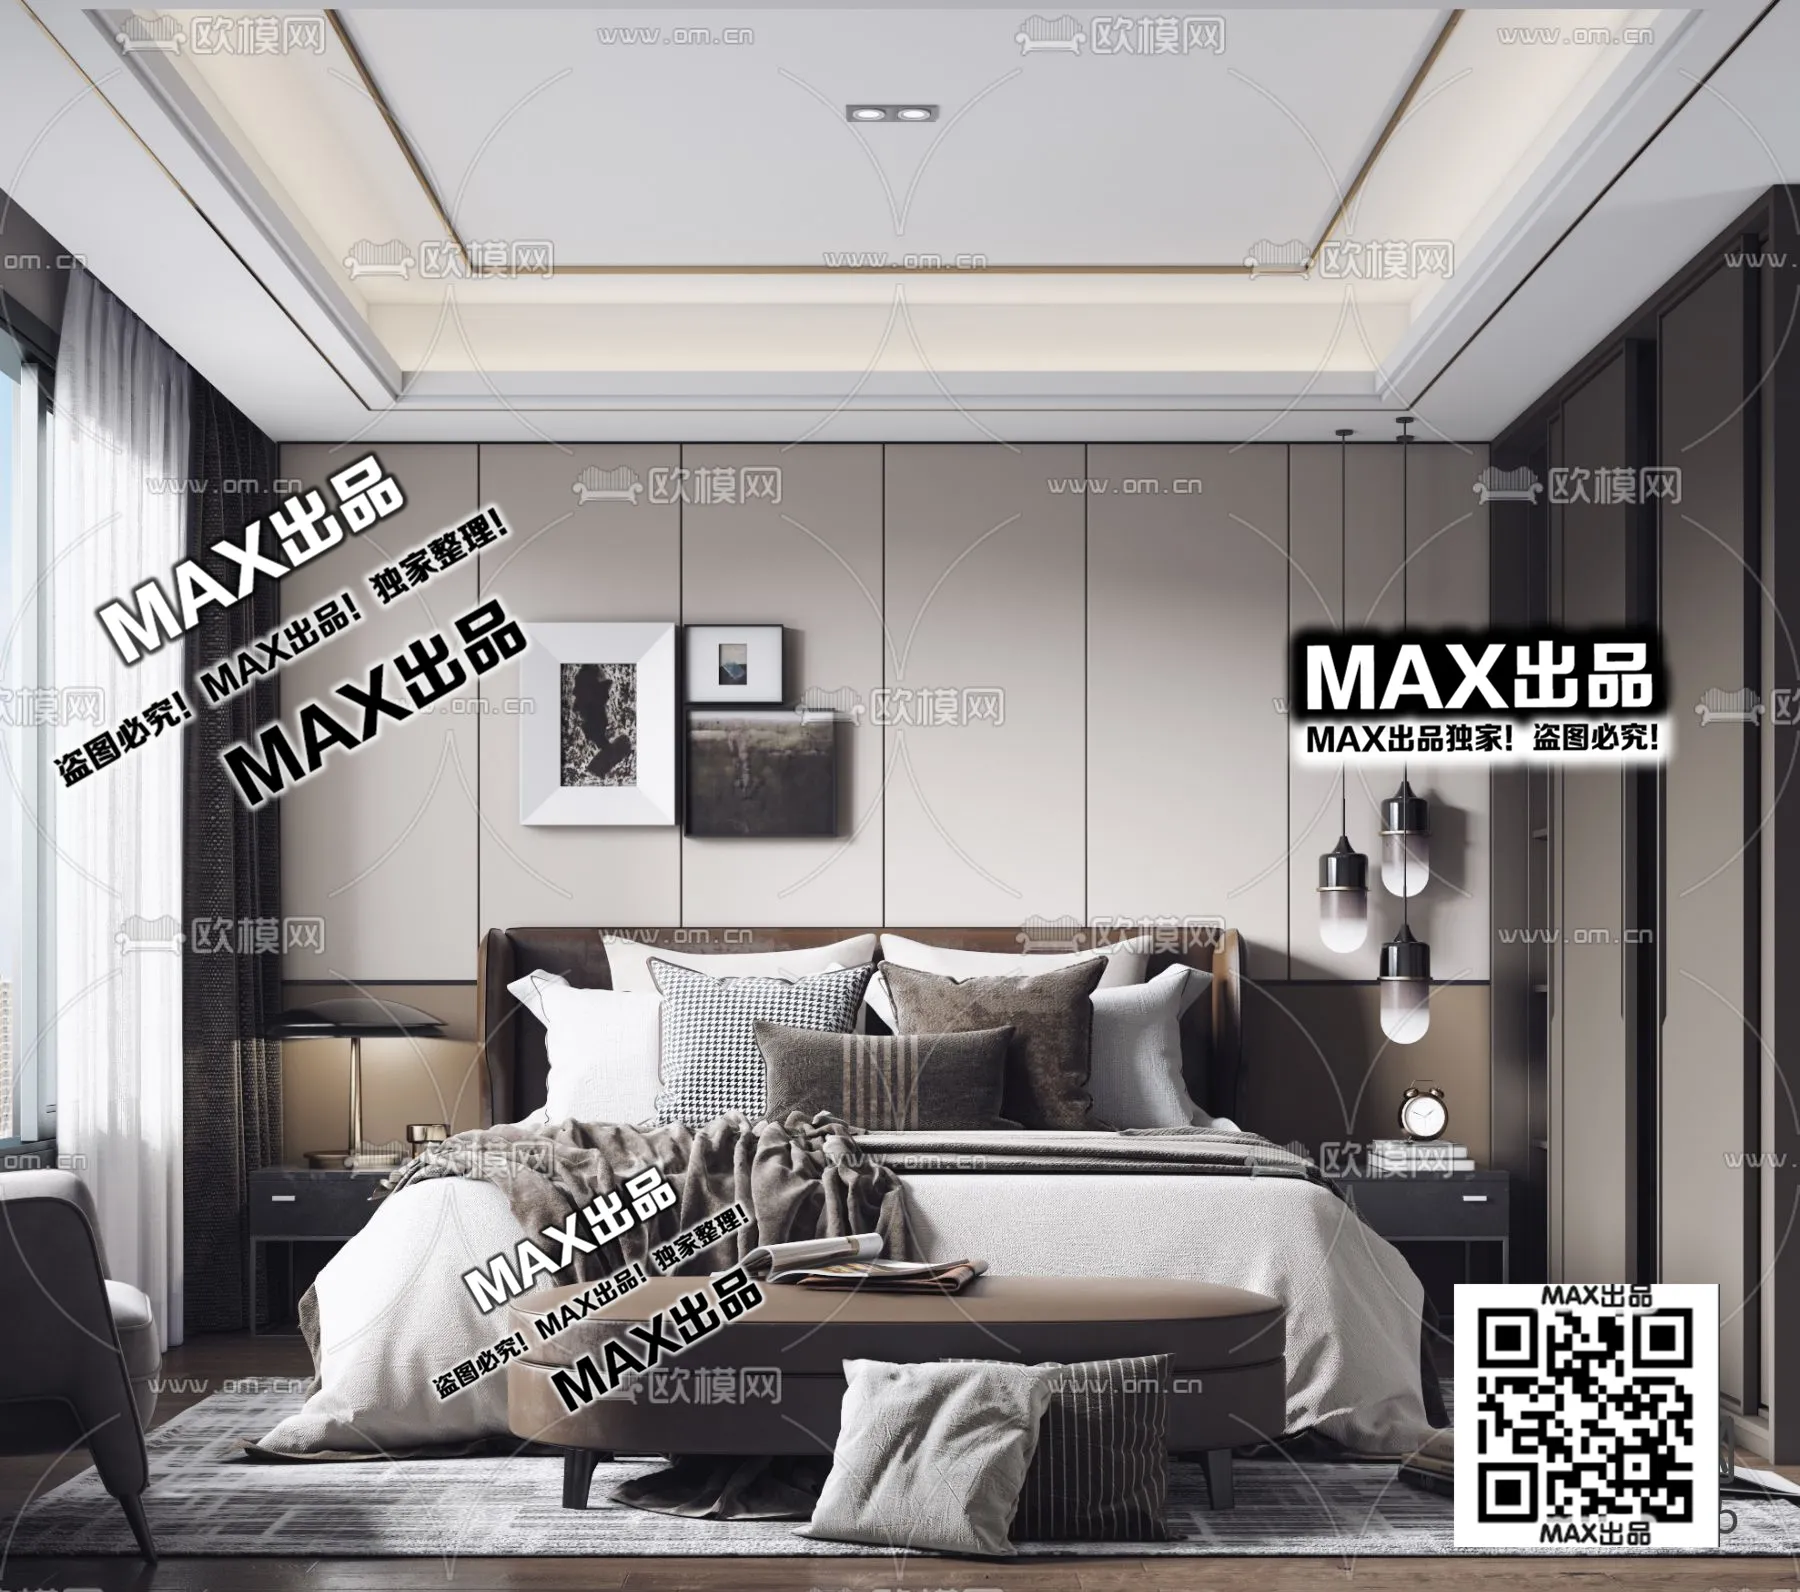 3DS MAX SCENES – LIVING ROOM – 045